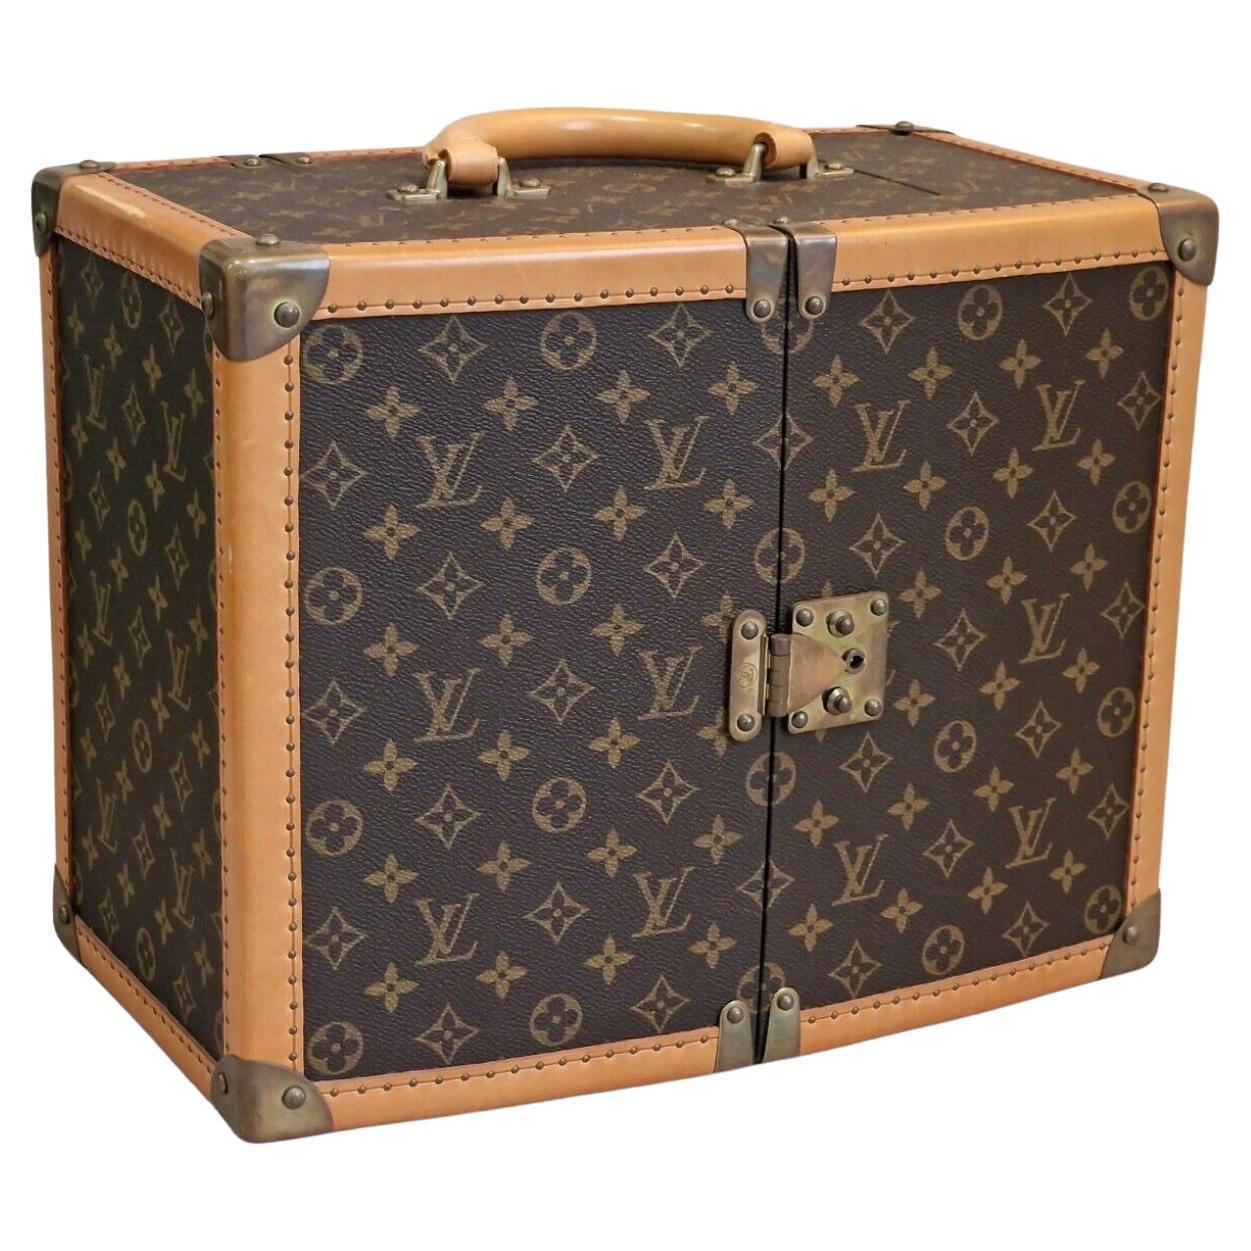 Louis Vuitton Trunk Sharon Stone Case amfAR One Of "100 Legendary Trunks" For Sale